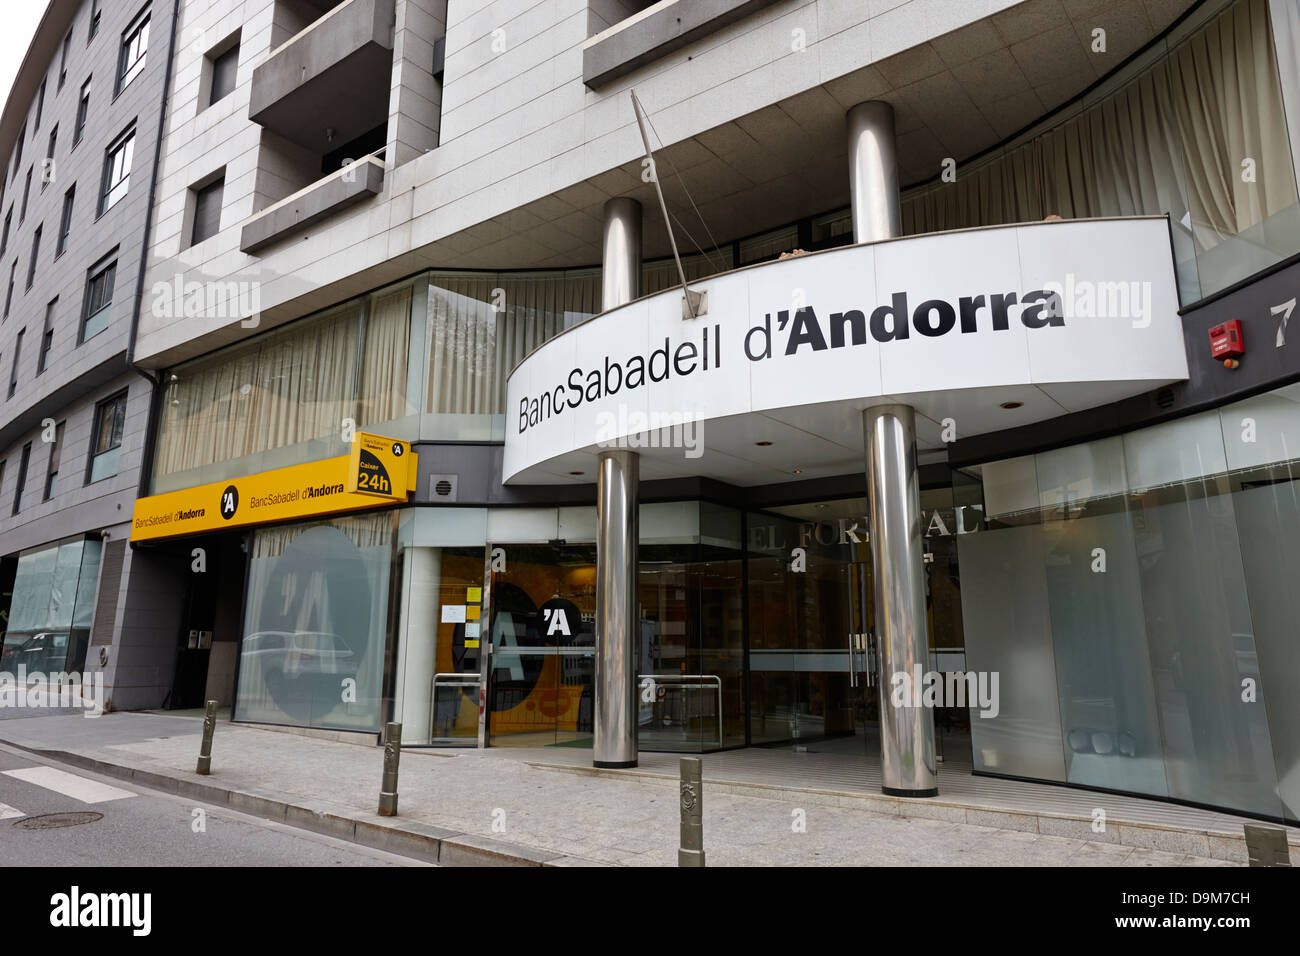 La banc sabadell d'Andorra Andorra la vella andorre banque Photo Stock -  Alamy